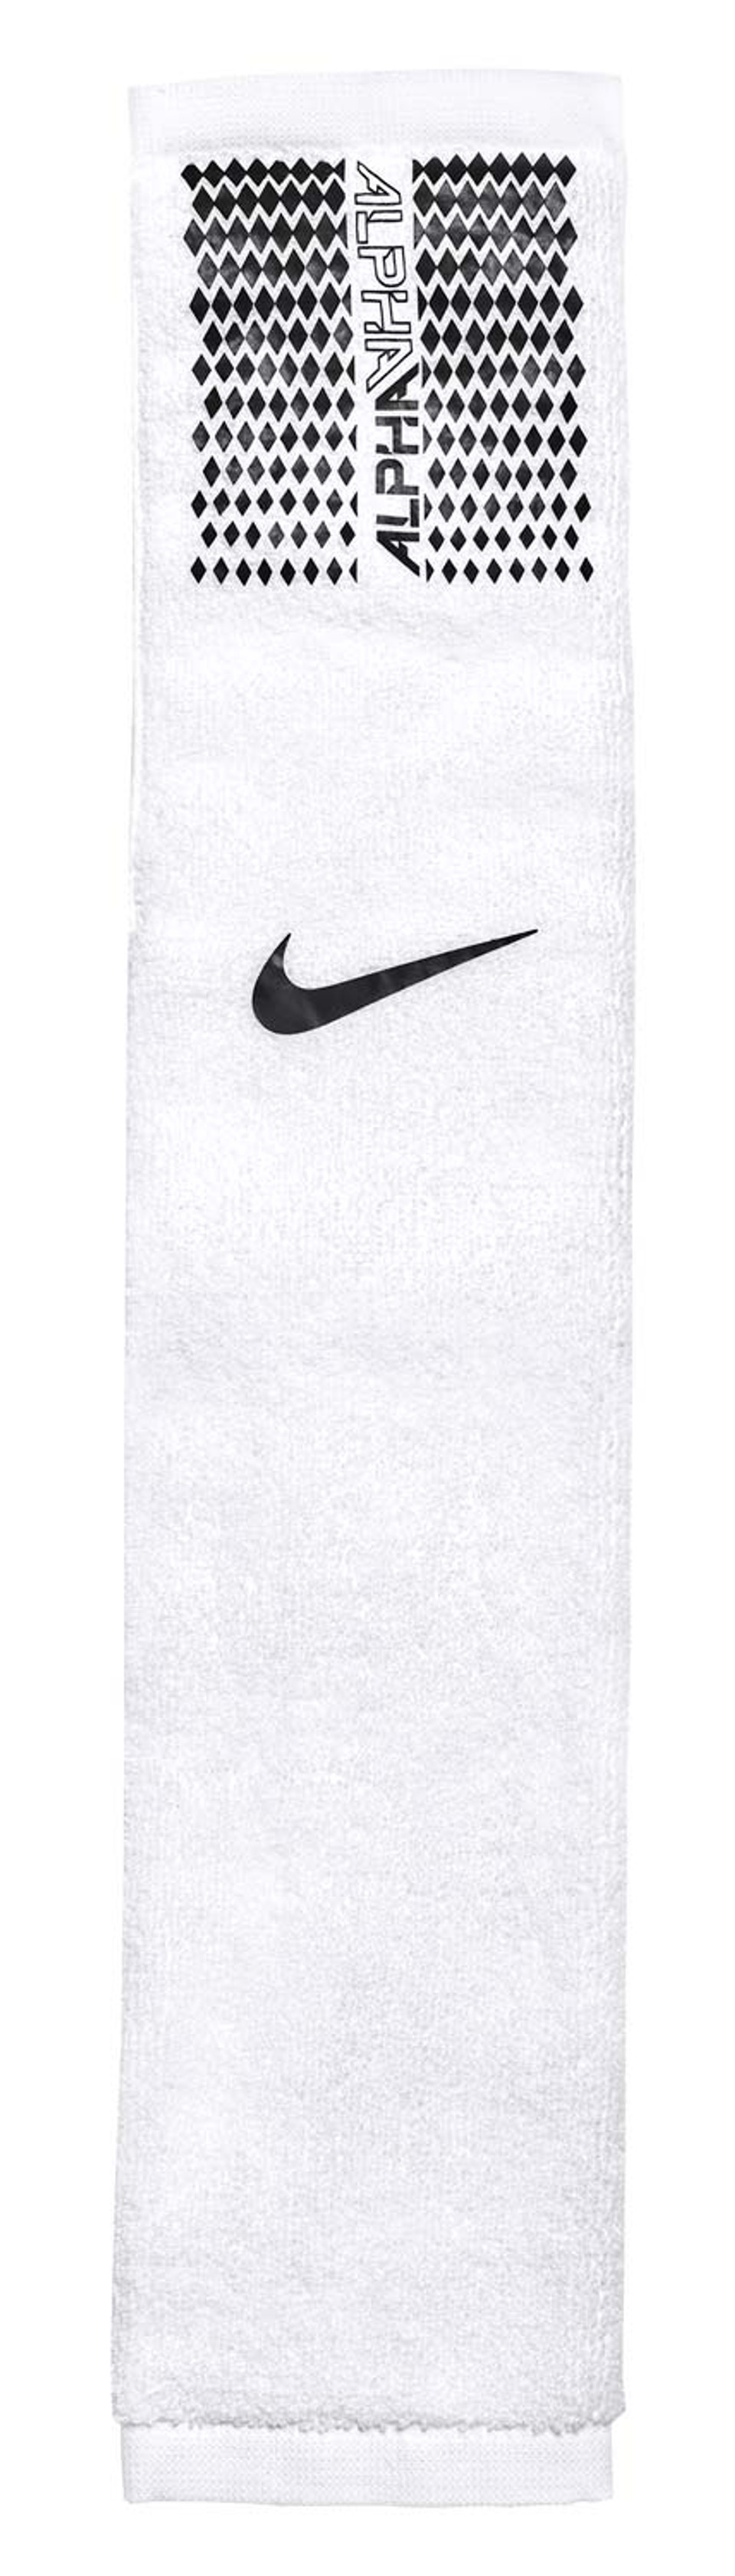 Nike Football Towel - Sports Unlimited